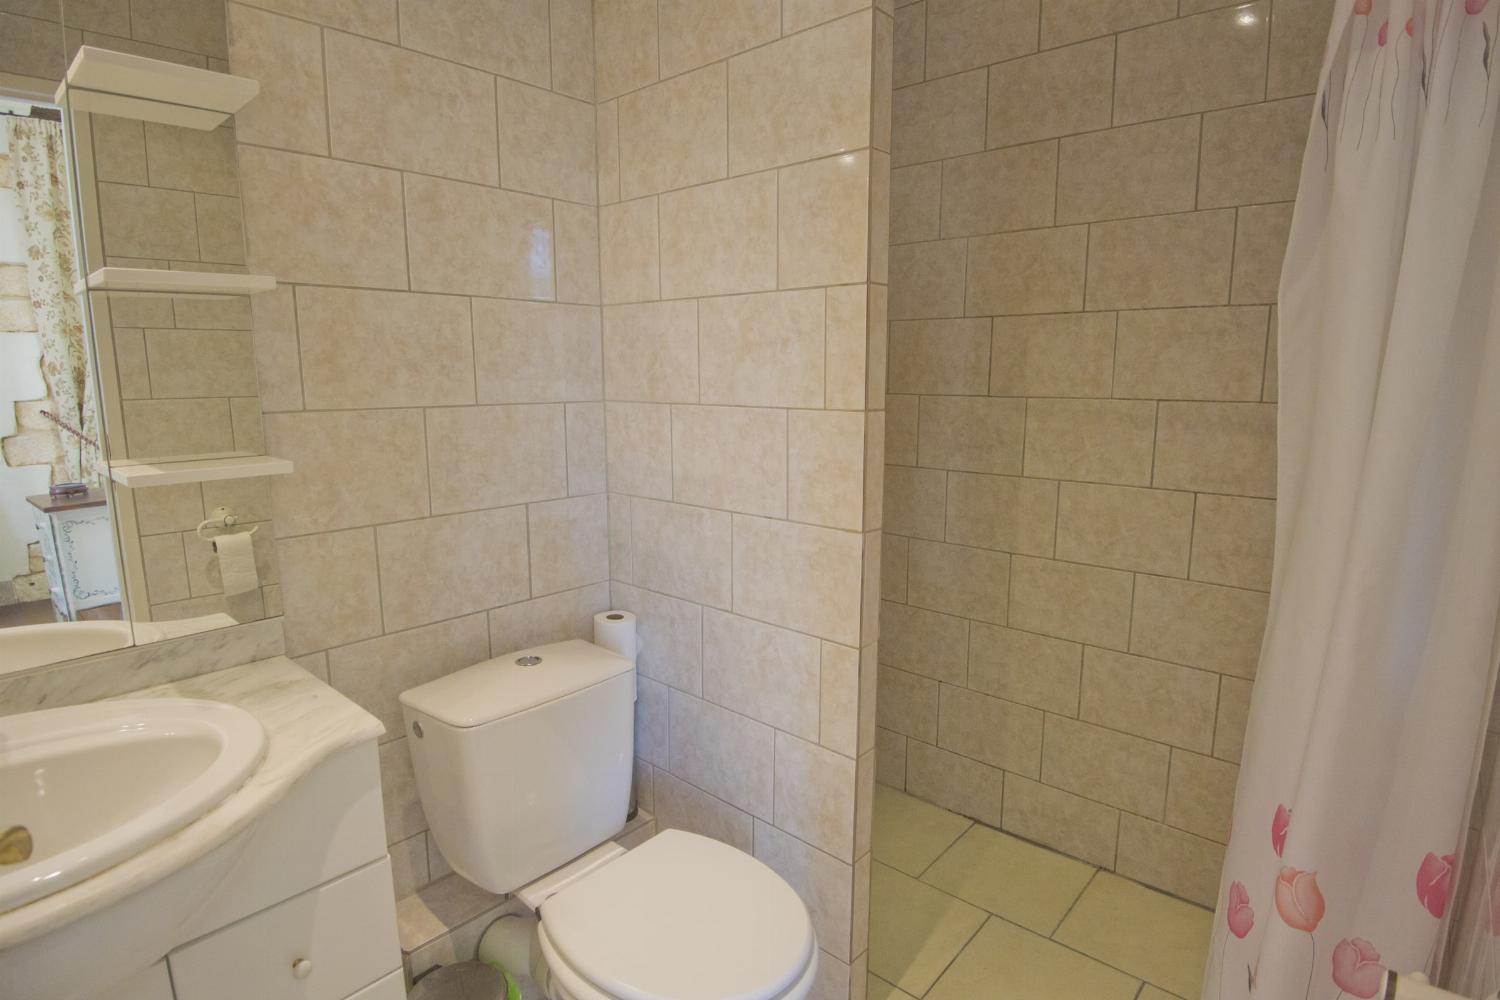 Bathroom | Rental home in Nouvelle-Aquitaine